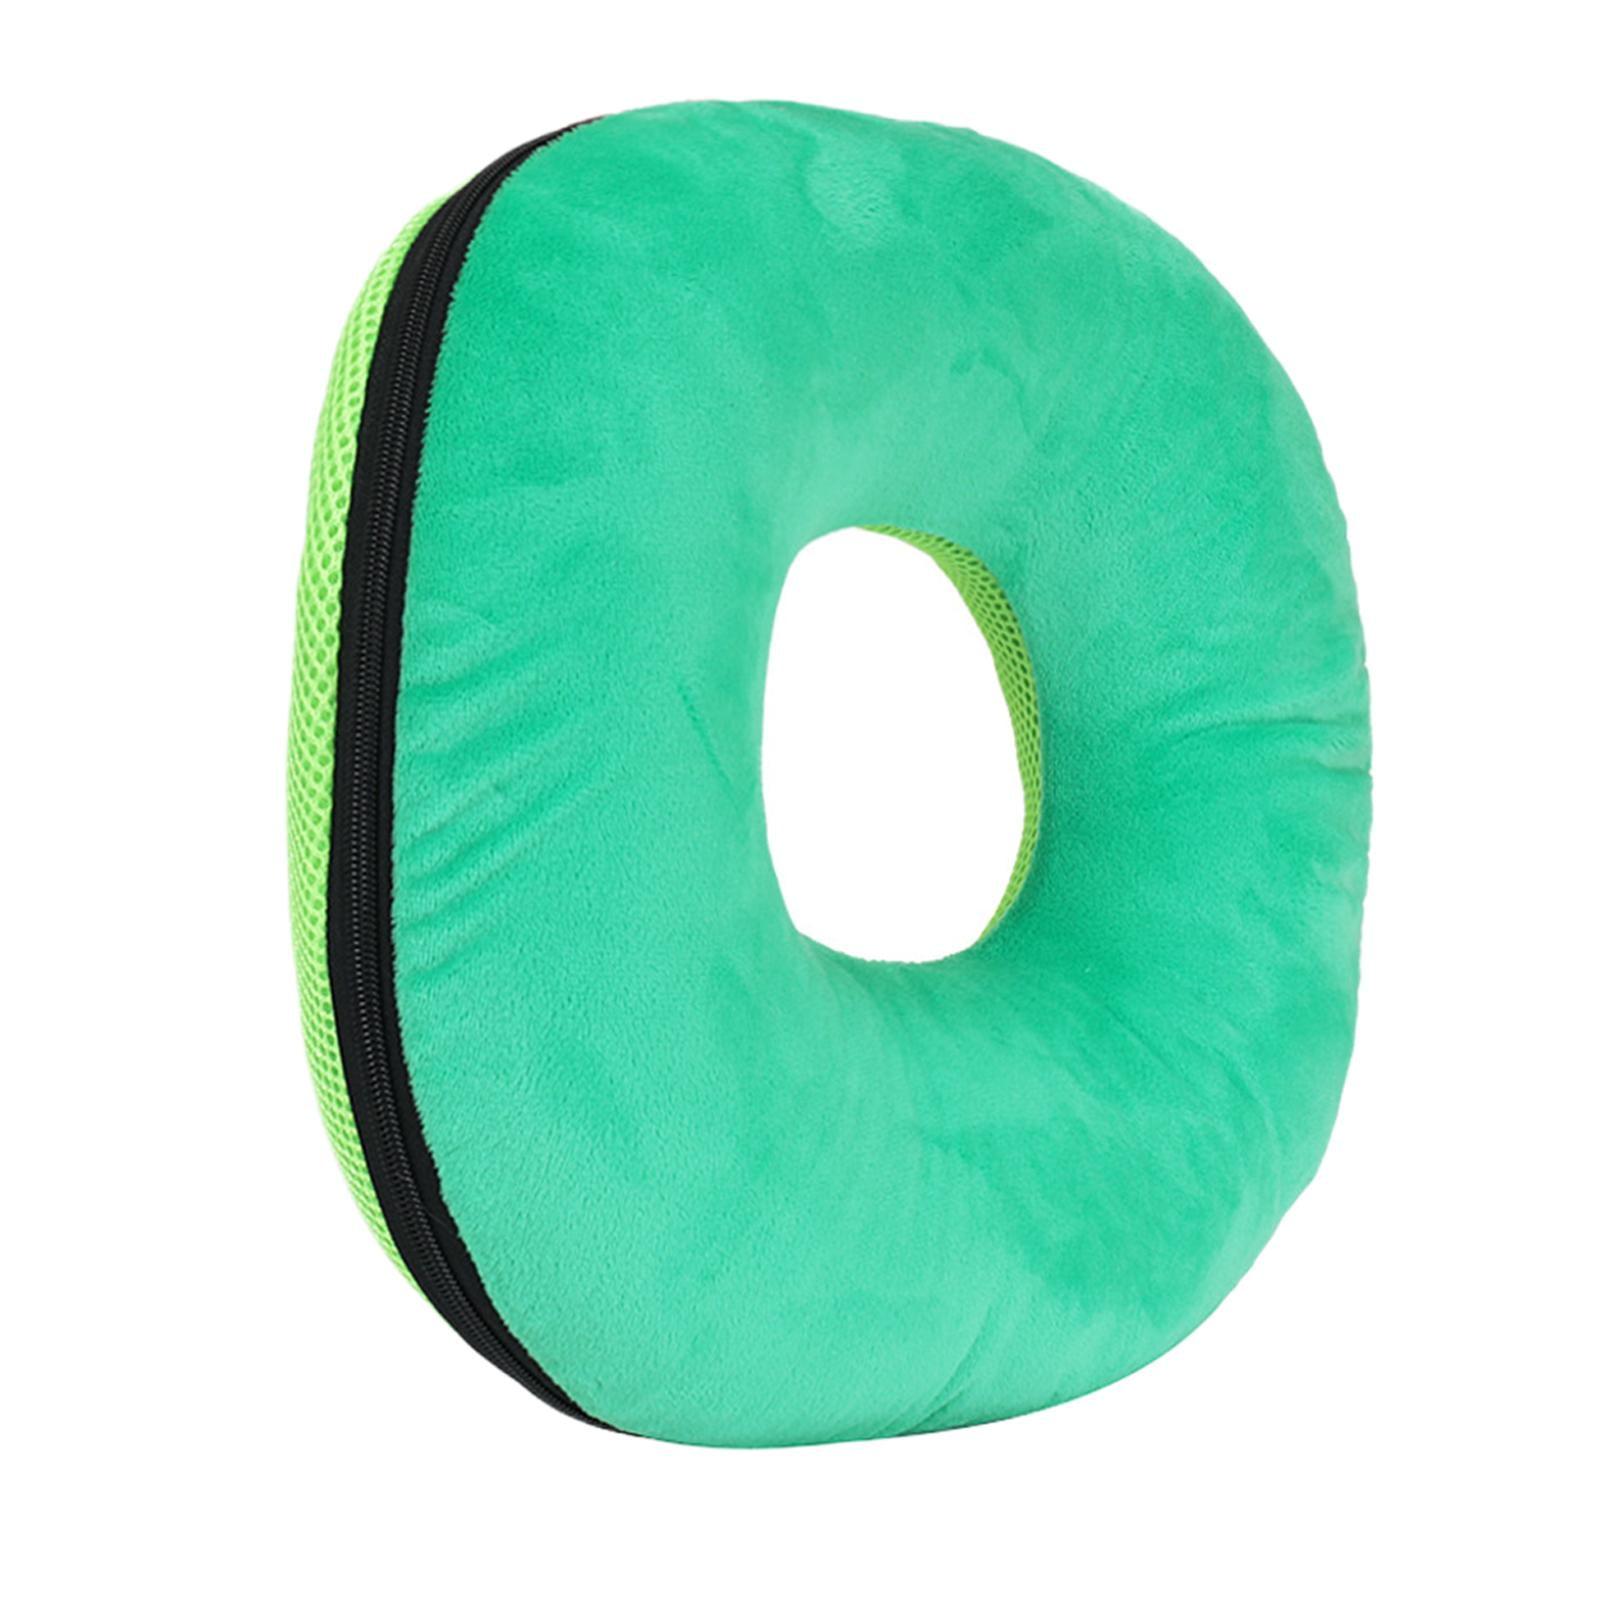 SM SunniMix Donut Pillow Tailbone Hemorrhoid Cushion Pain for The Elderly Light, Size: As described